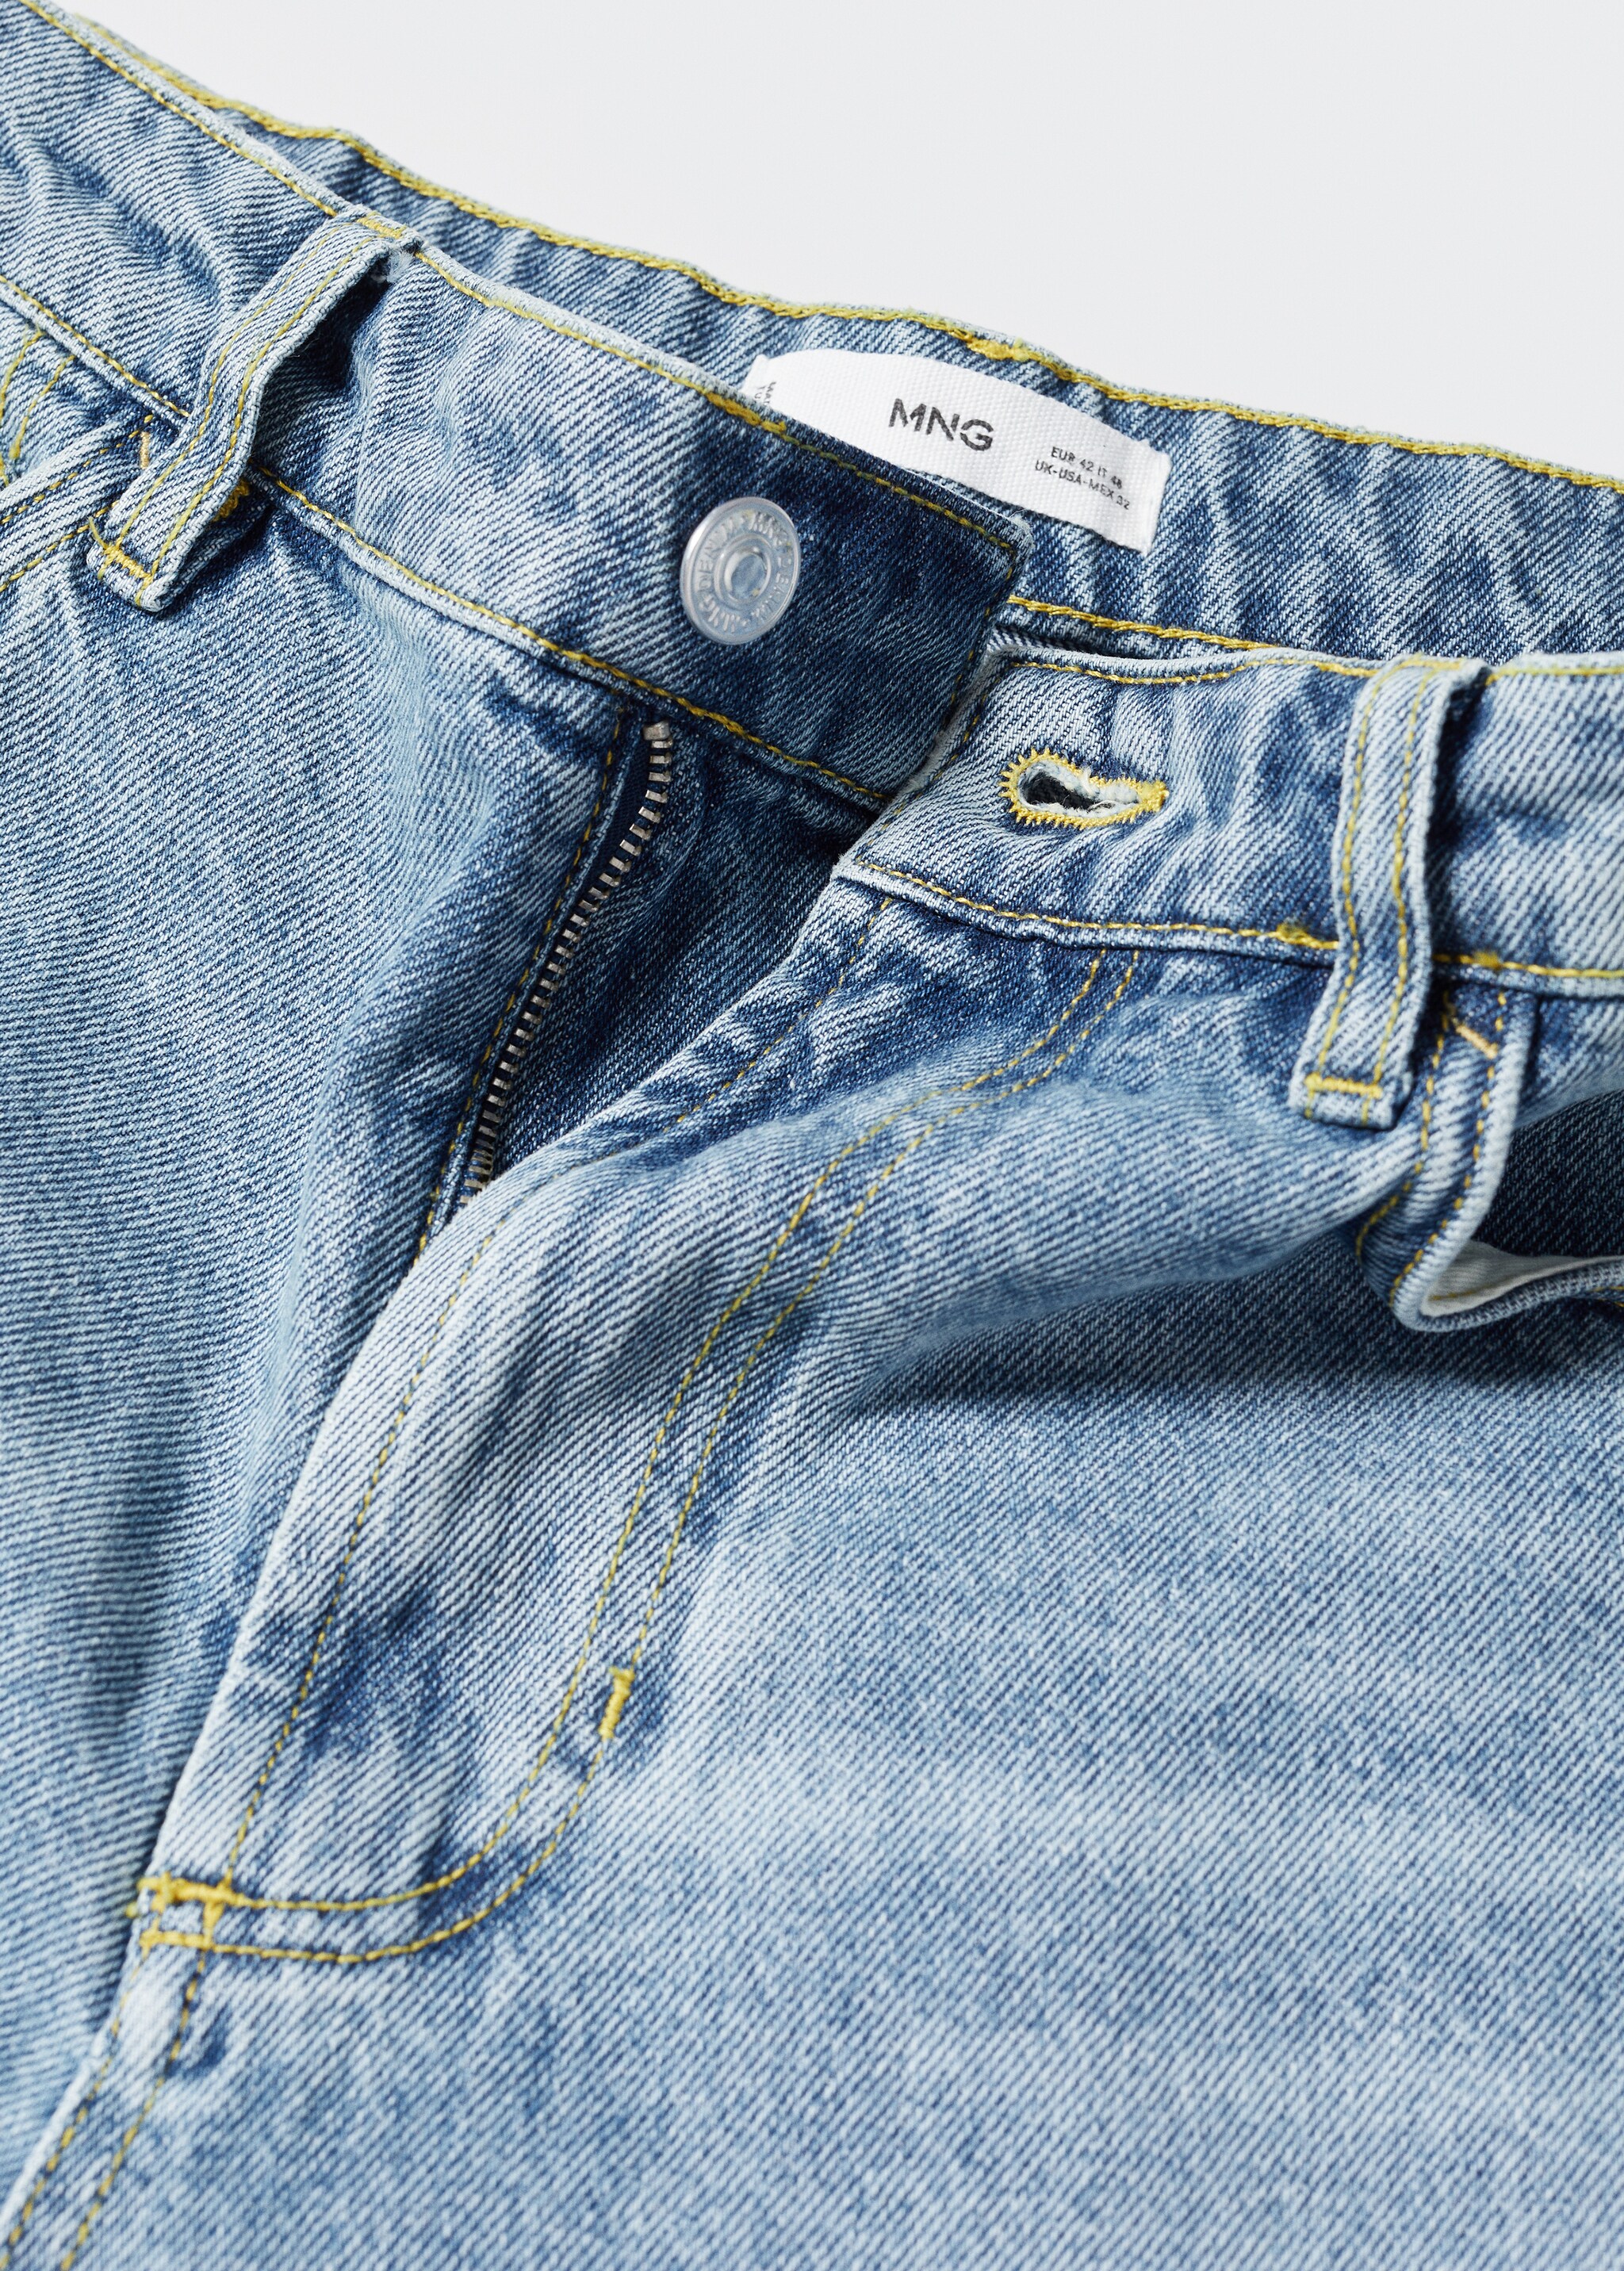 Jeans tapered loose cropped  - Detalle del artículo 8